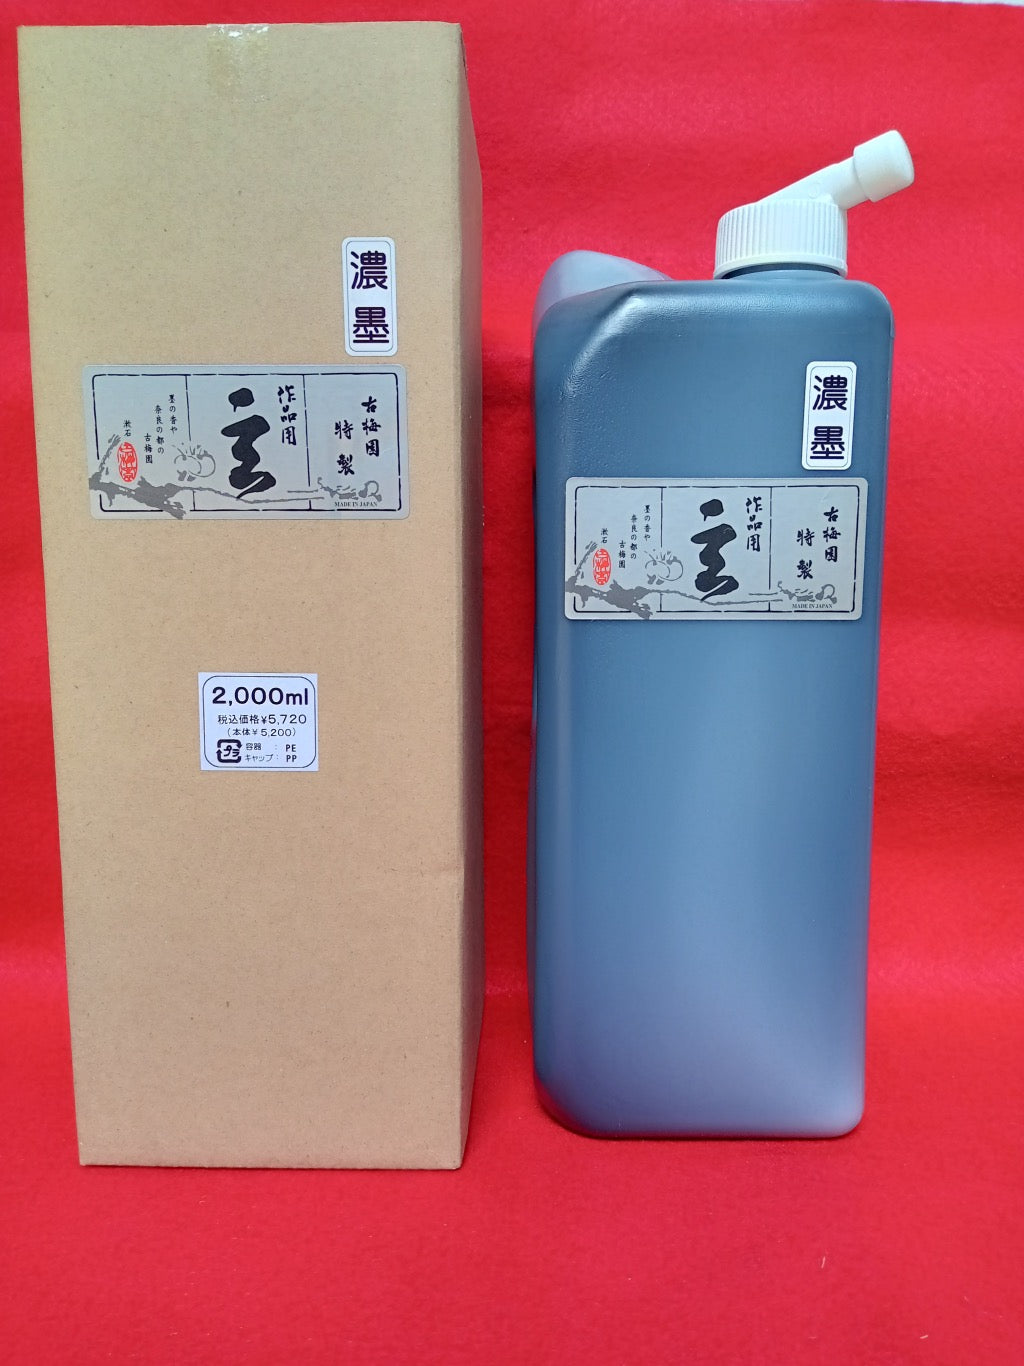 Gen ( dark 玄 古梅园(古梅園 墨汁 墨液 ) ) Kobaien sumi liquid ink 由古梅园(古梅園)制造 manufactured by KOBAIEN, Nara, Japan